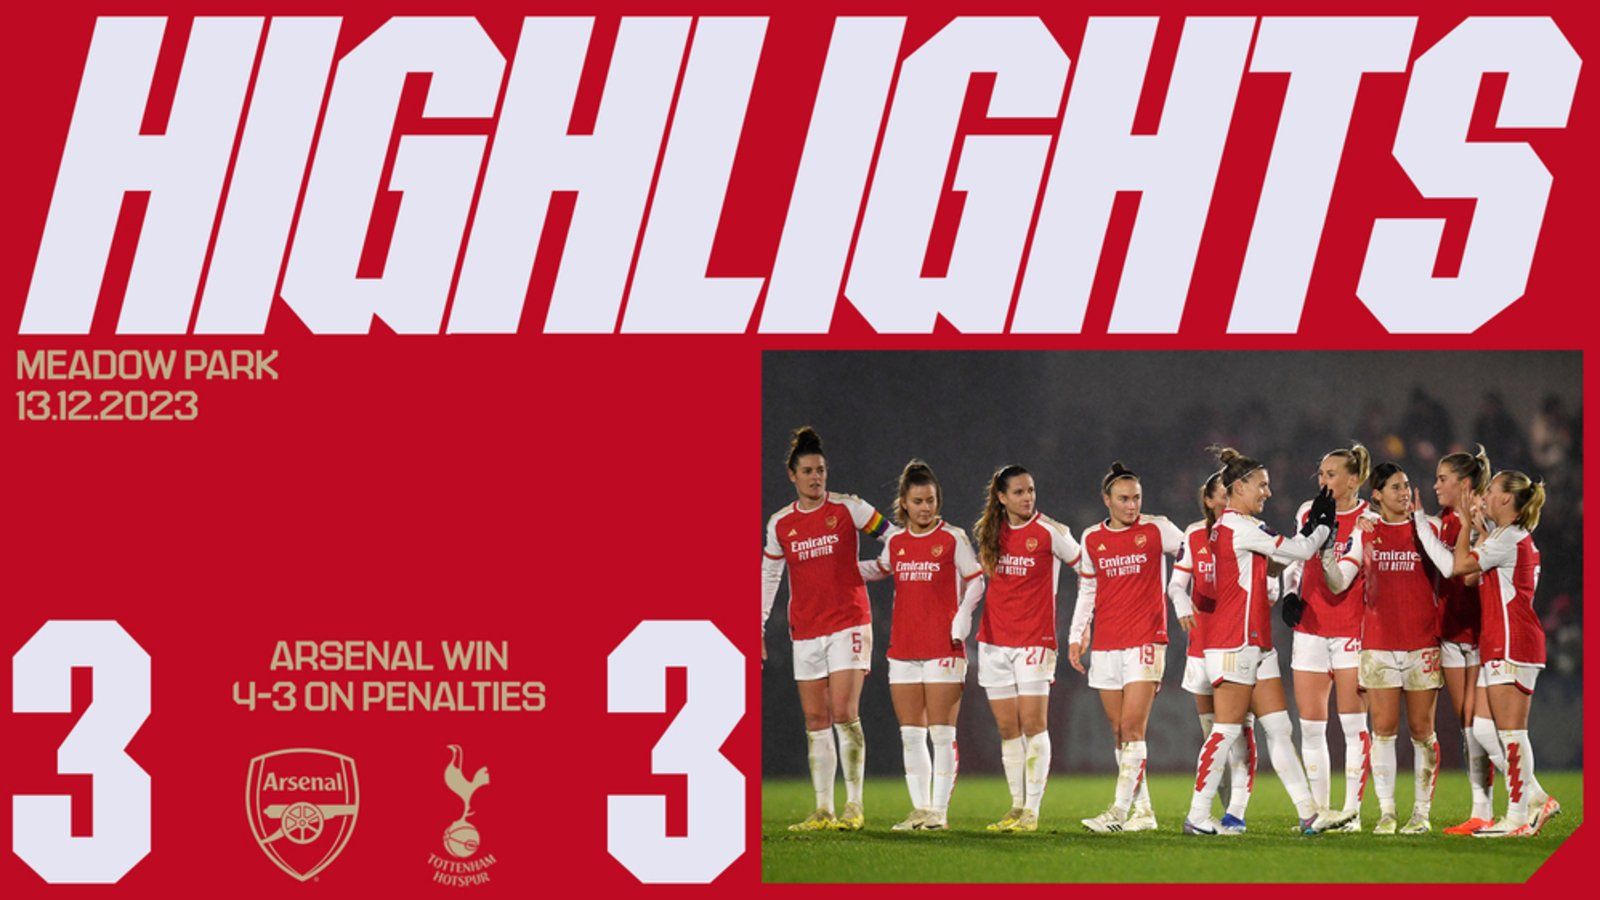 HIGHLIGHTS: Liverpool 4-3 Tottenham Hotspur